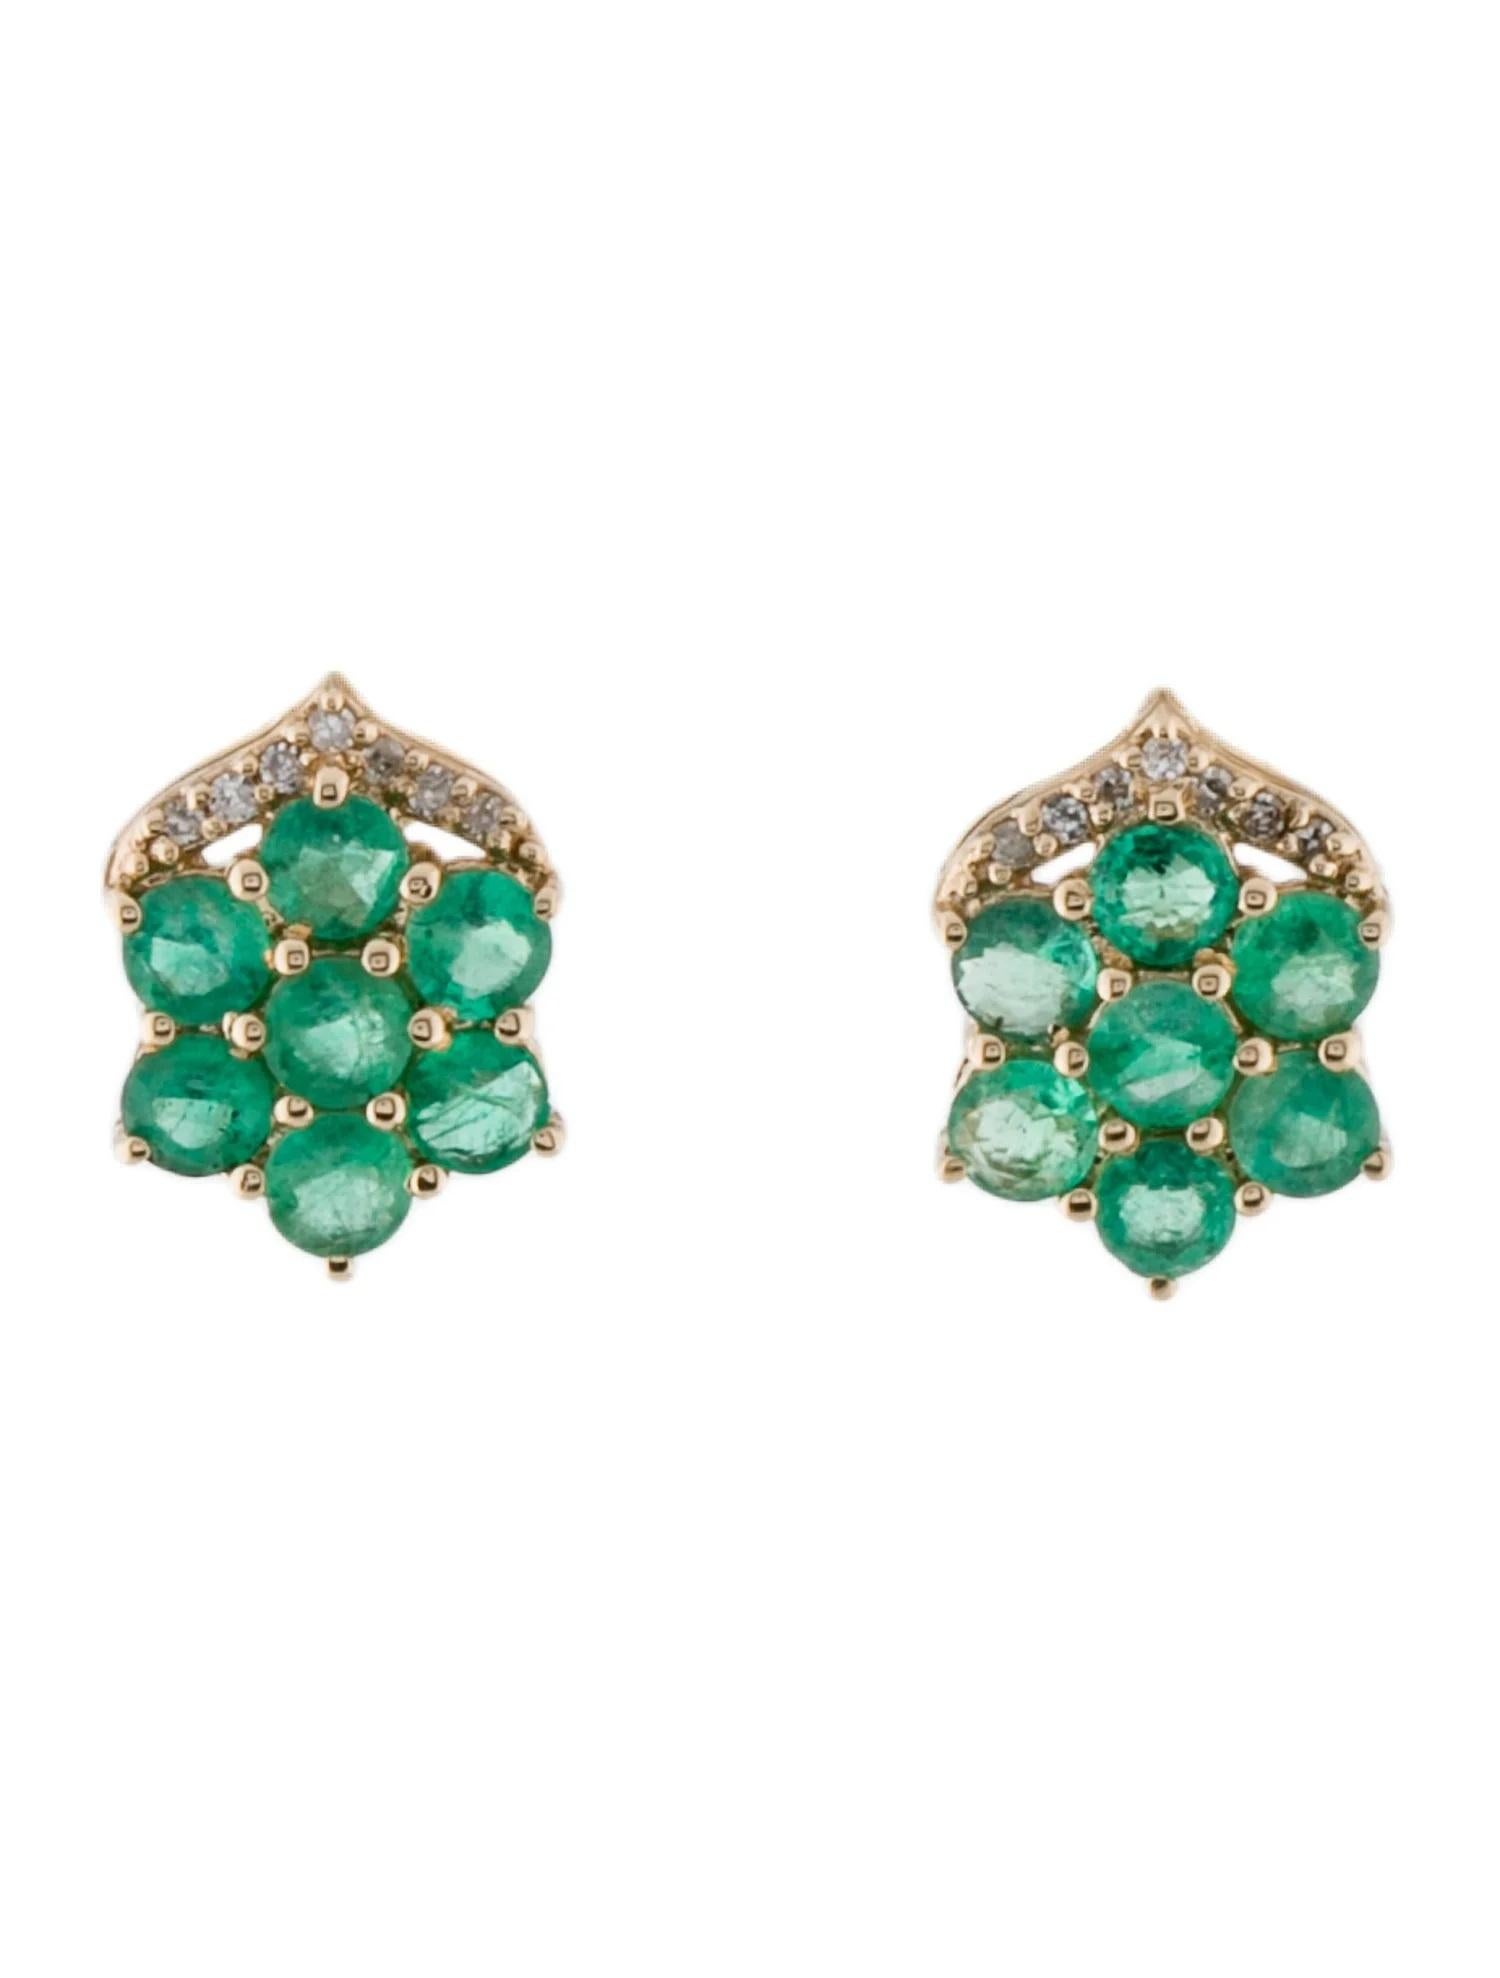 Emerald Cut 14K Emerald and Diamond Drop Earrings, 1.41ctw Round Brilliant Emerald For Sale